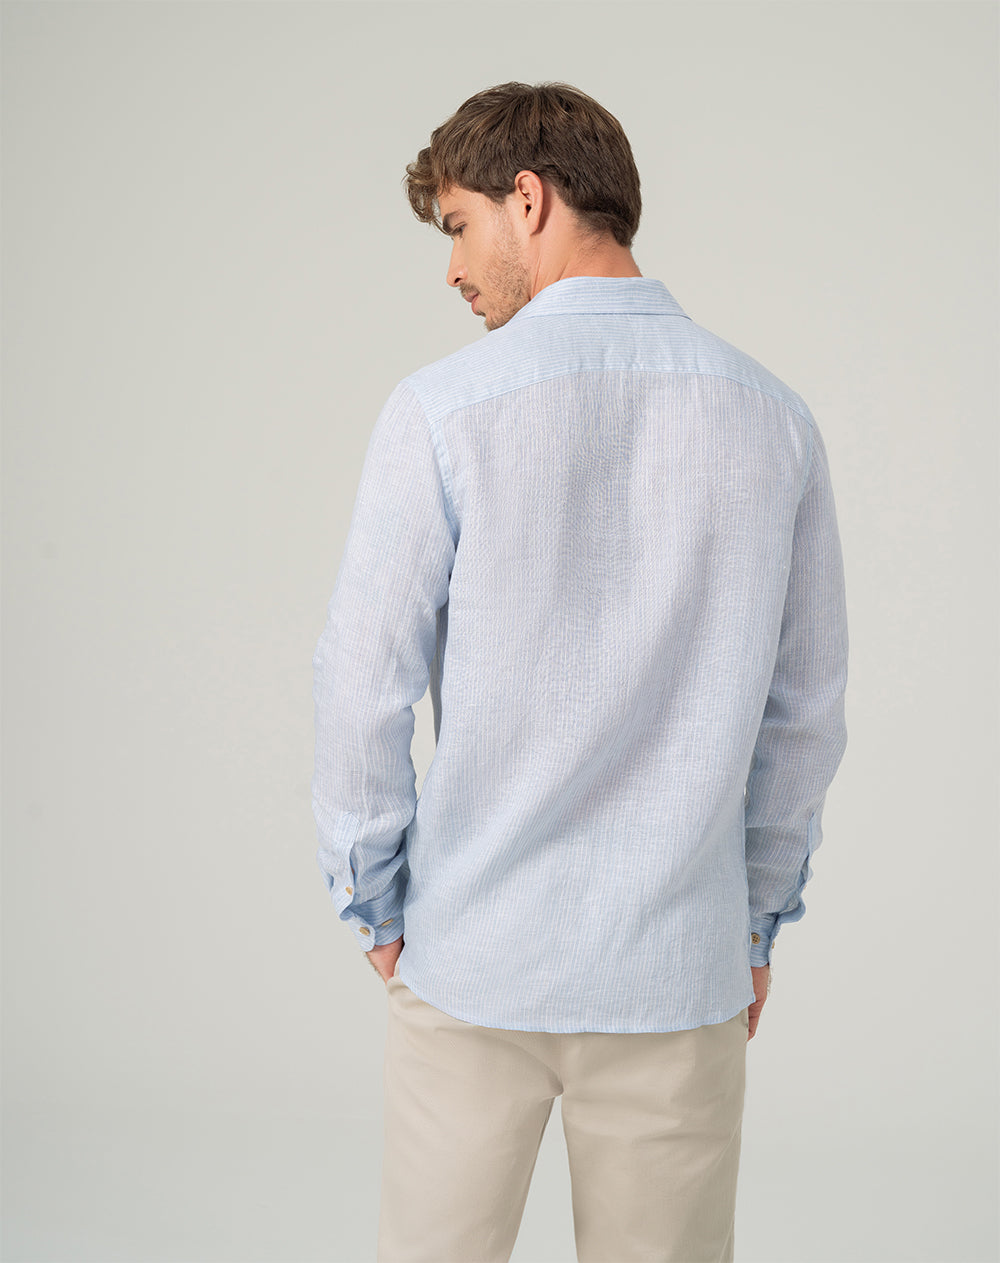 Camisa regular fit manga larga azul con rayas